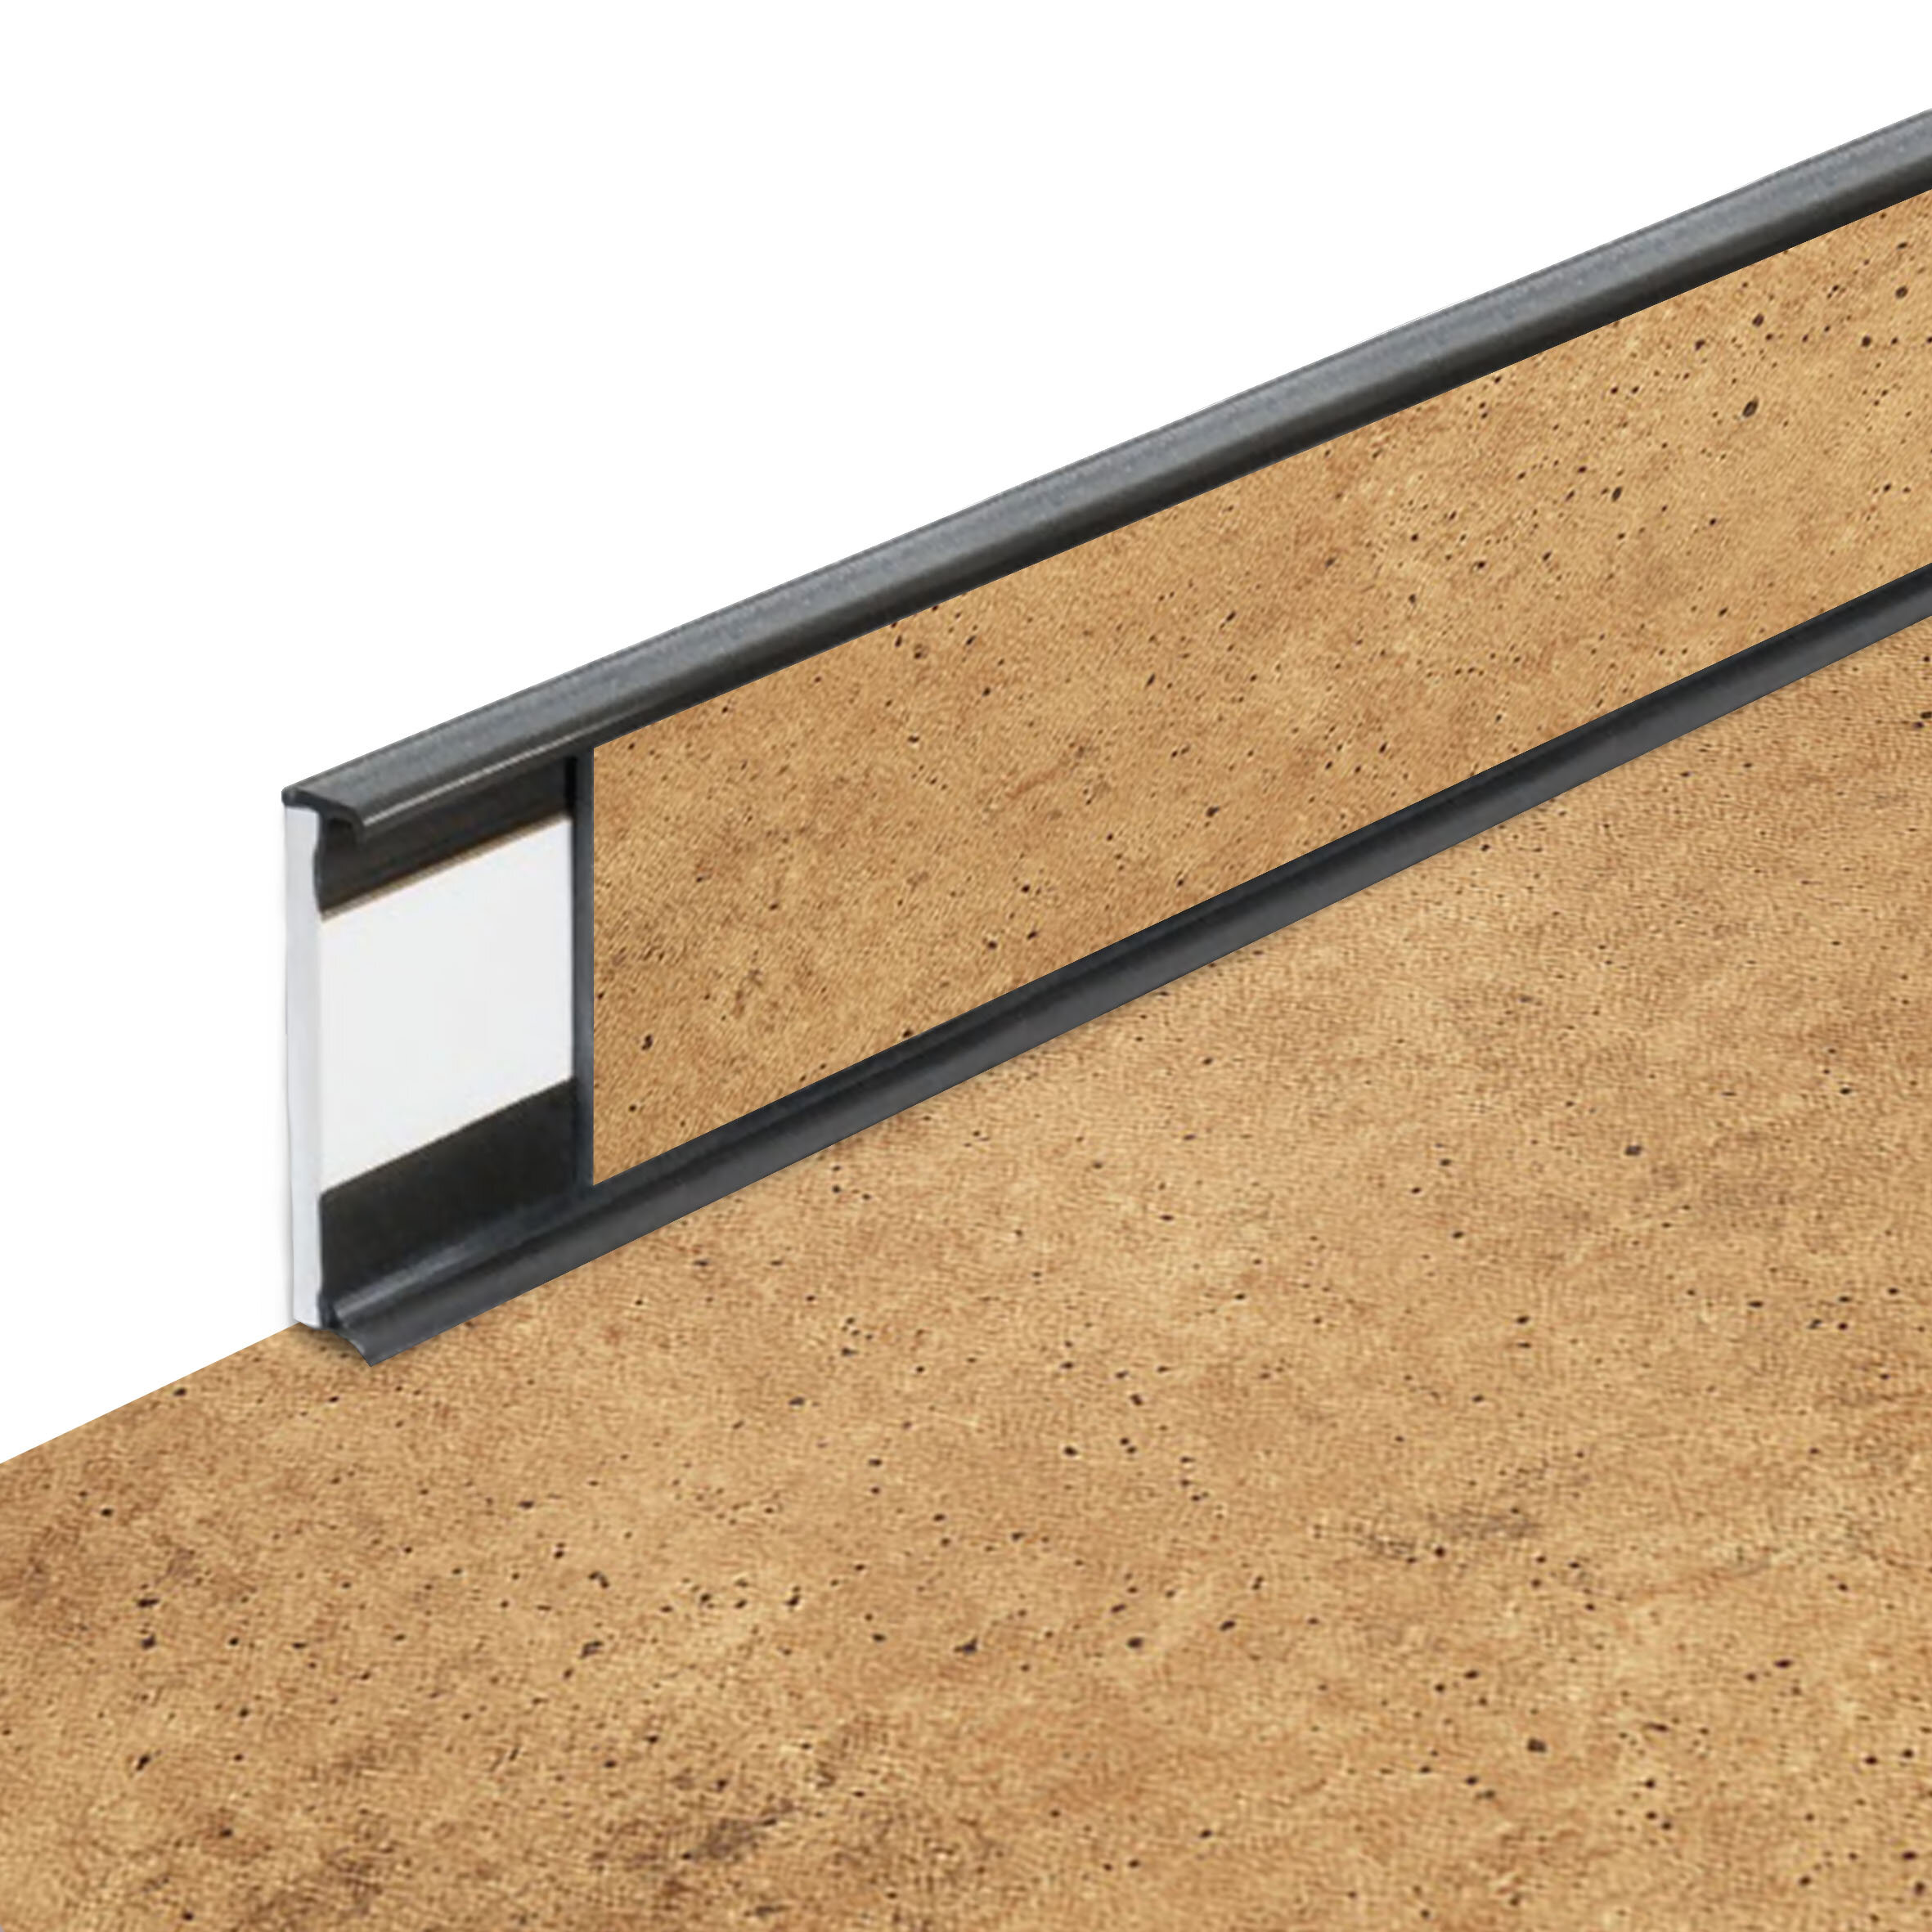 PVC vinylová soklová podlahová lišta Fortelock Business Tornes Mars C006 Graphite - délka 200 cm, výška 5,8 cm, tloušťka 1,2 cm